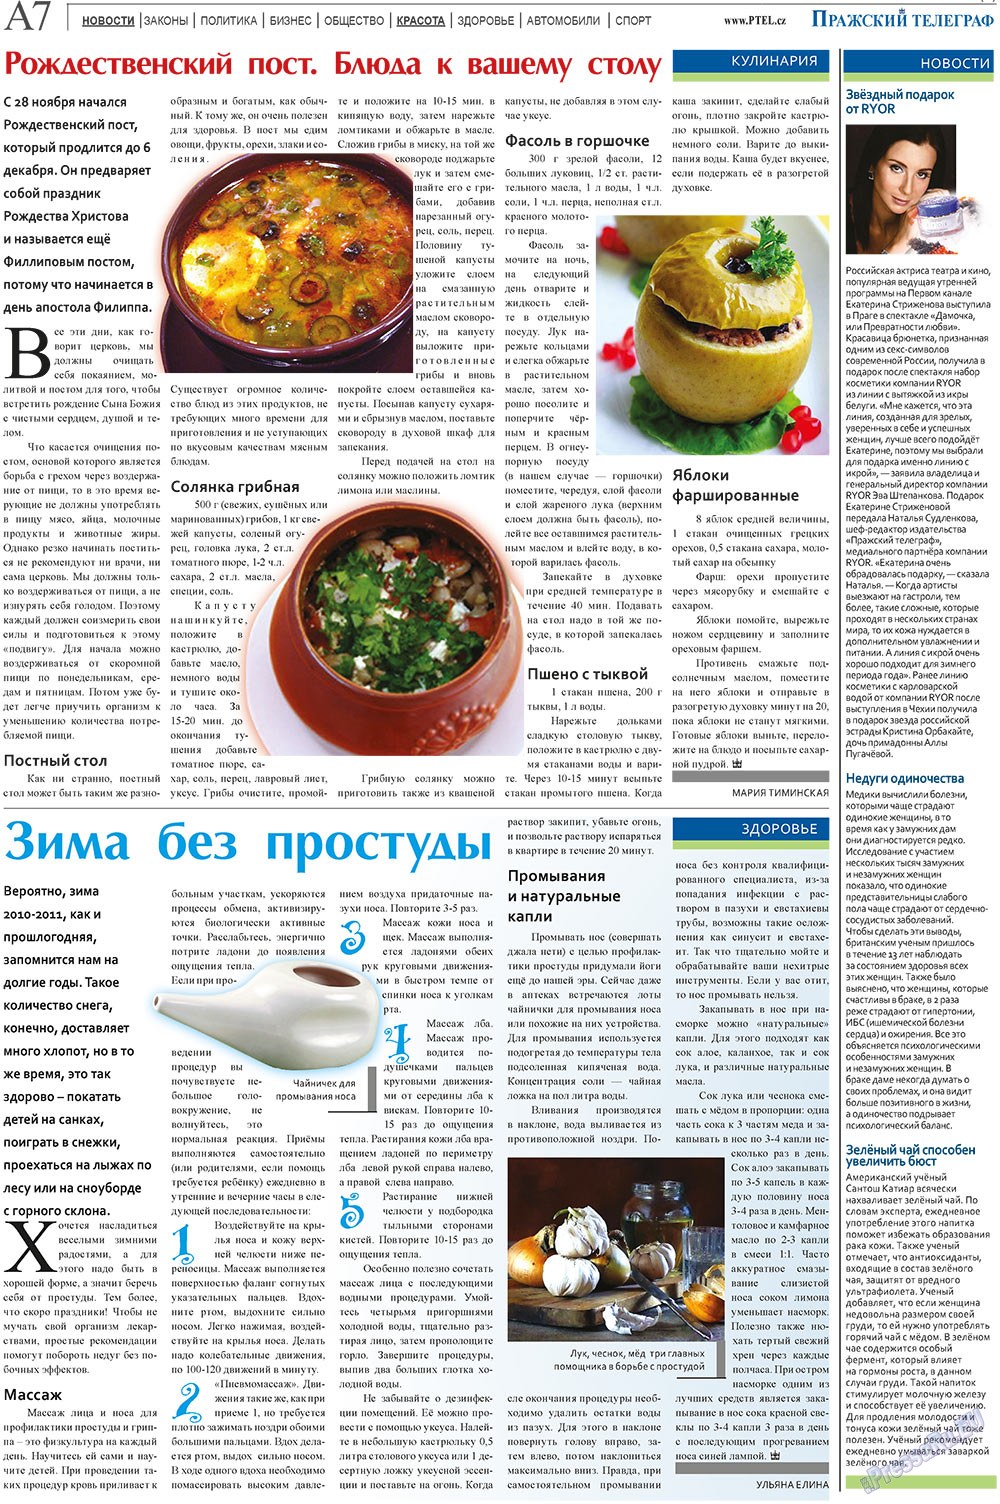 Пражский телеграф, газета. 2010 №49 стр.7